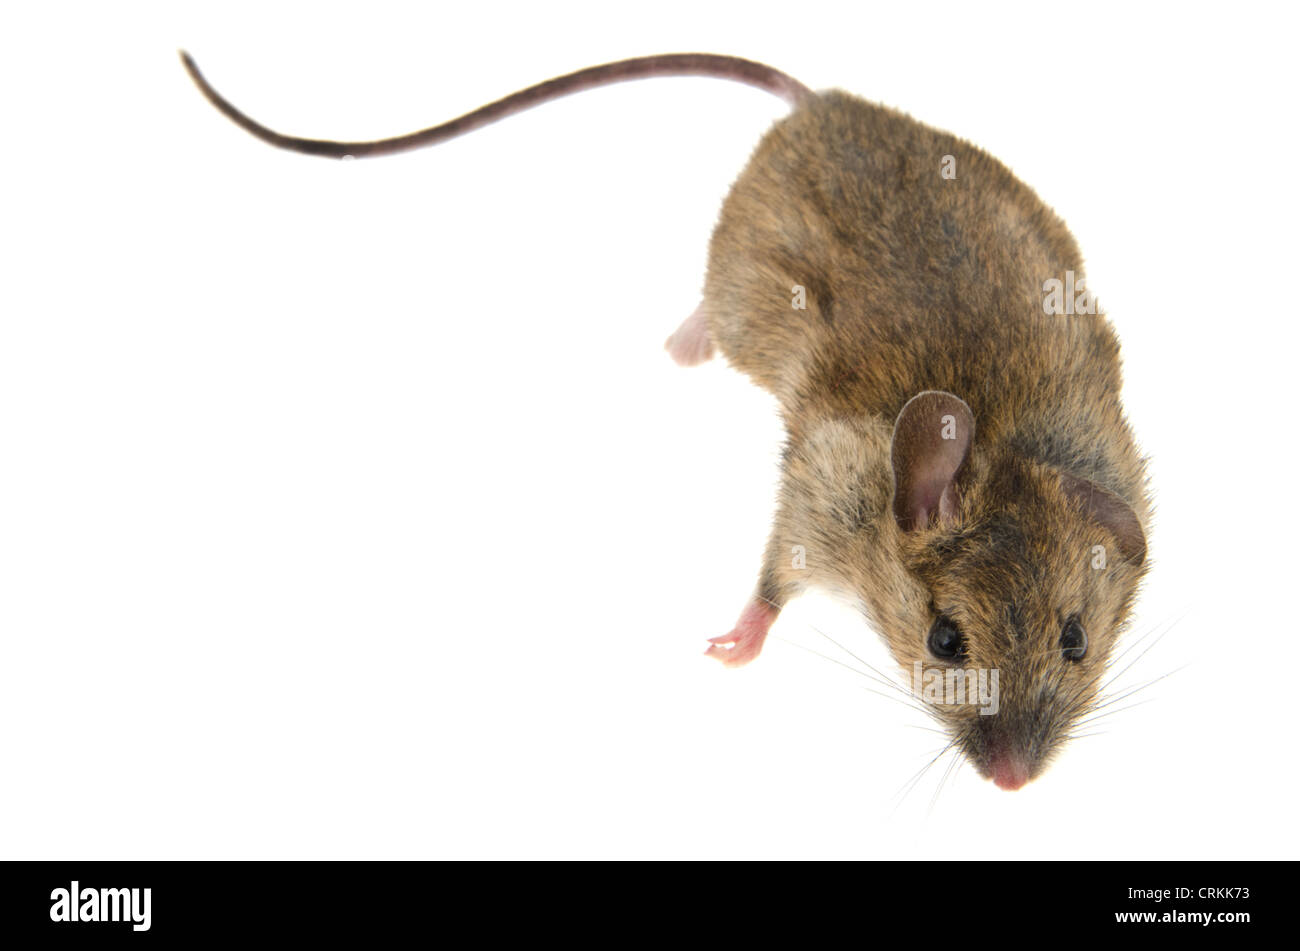 Casa del ratón (Mus musculus) - Foto de estudio Foto de stock